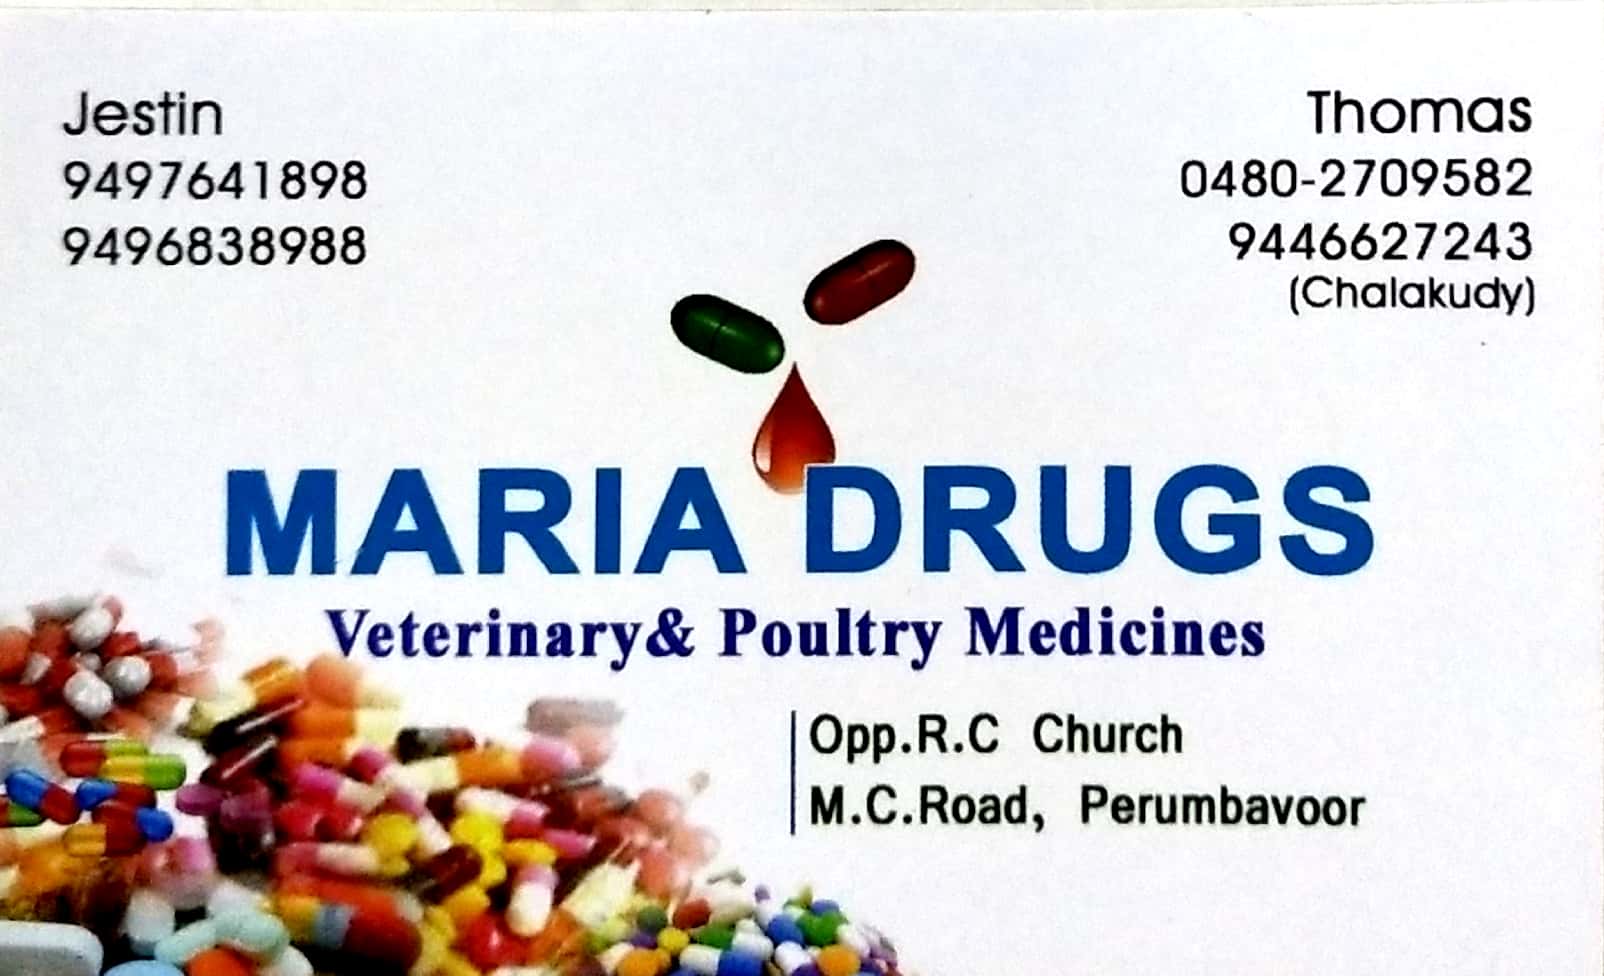 MARIA DRUGS Veterinary & Poultry Medicines, VETERINARY & POULTRY,  service in Perumbavoor, Ernakulam